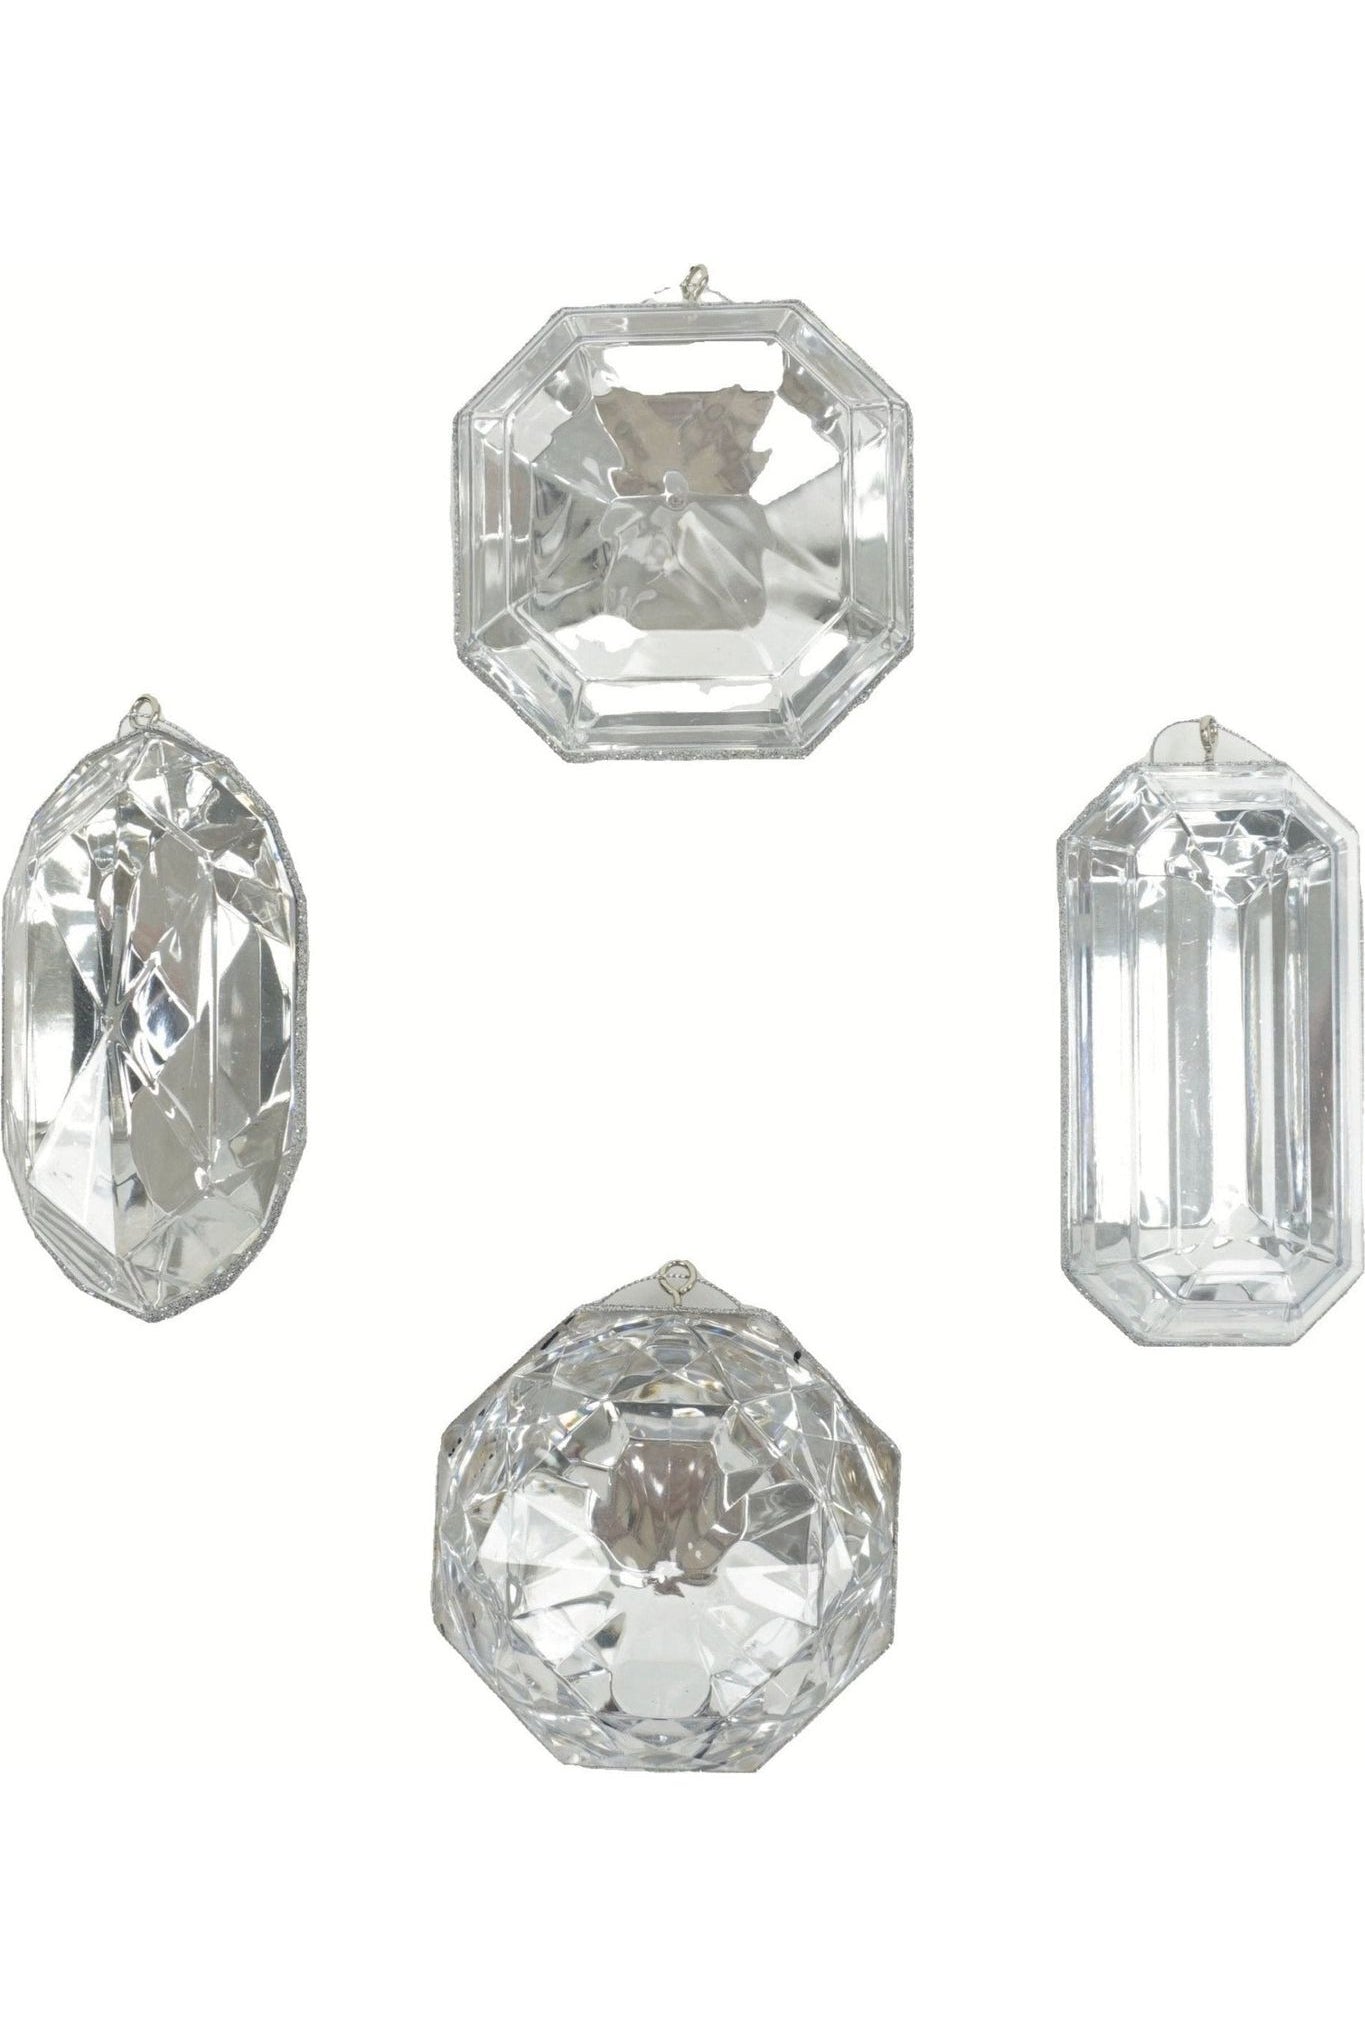 Shop For Acrylic Jewel Assortment Ornament: Crystal (Set 4) CX958-44